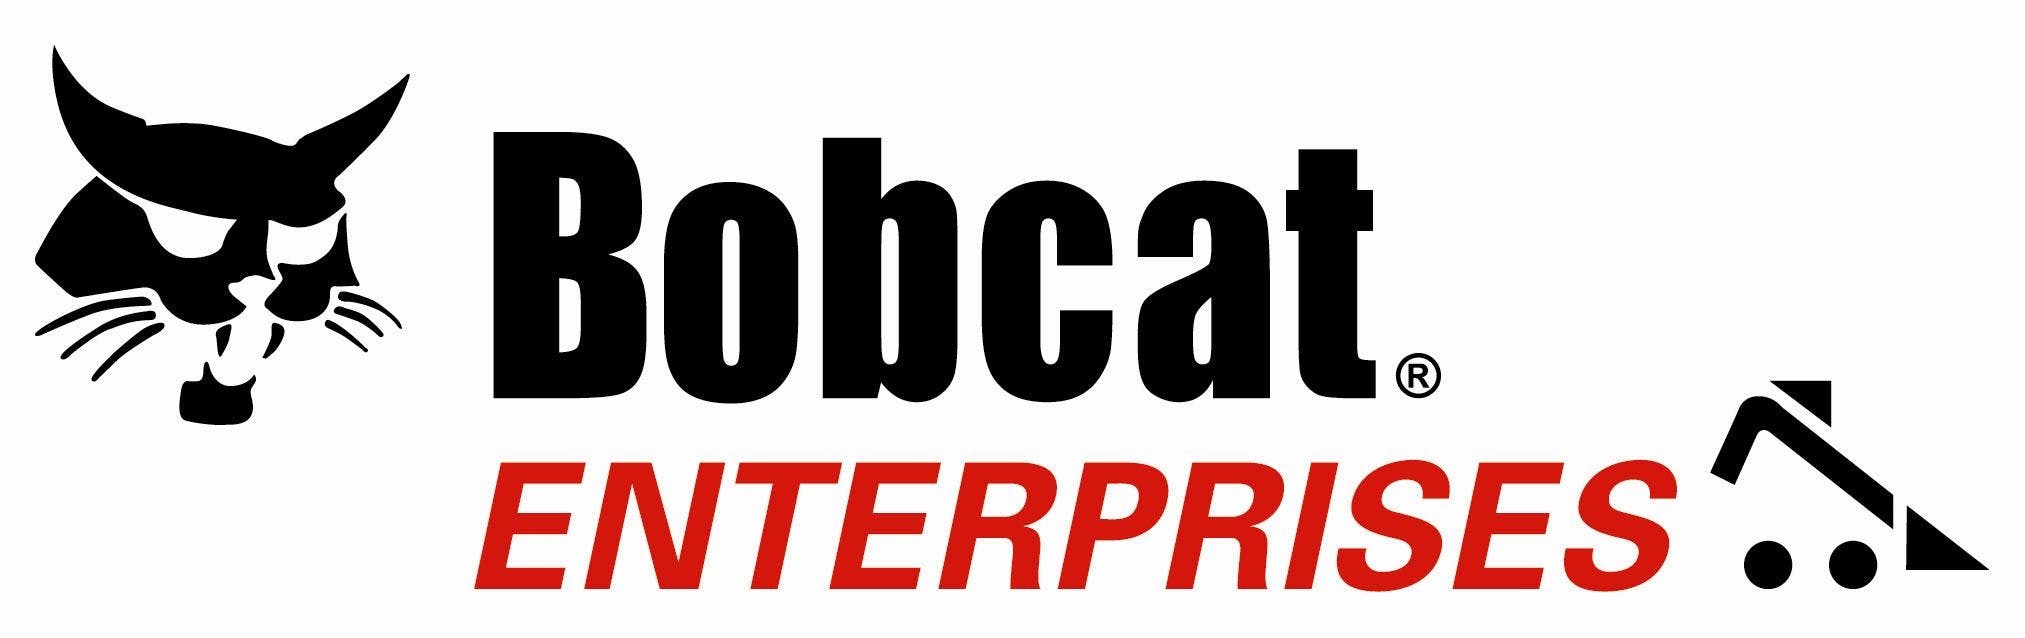 Company logo for 'Bobcat Enterprises- Lexington'.